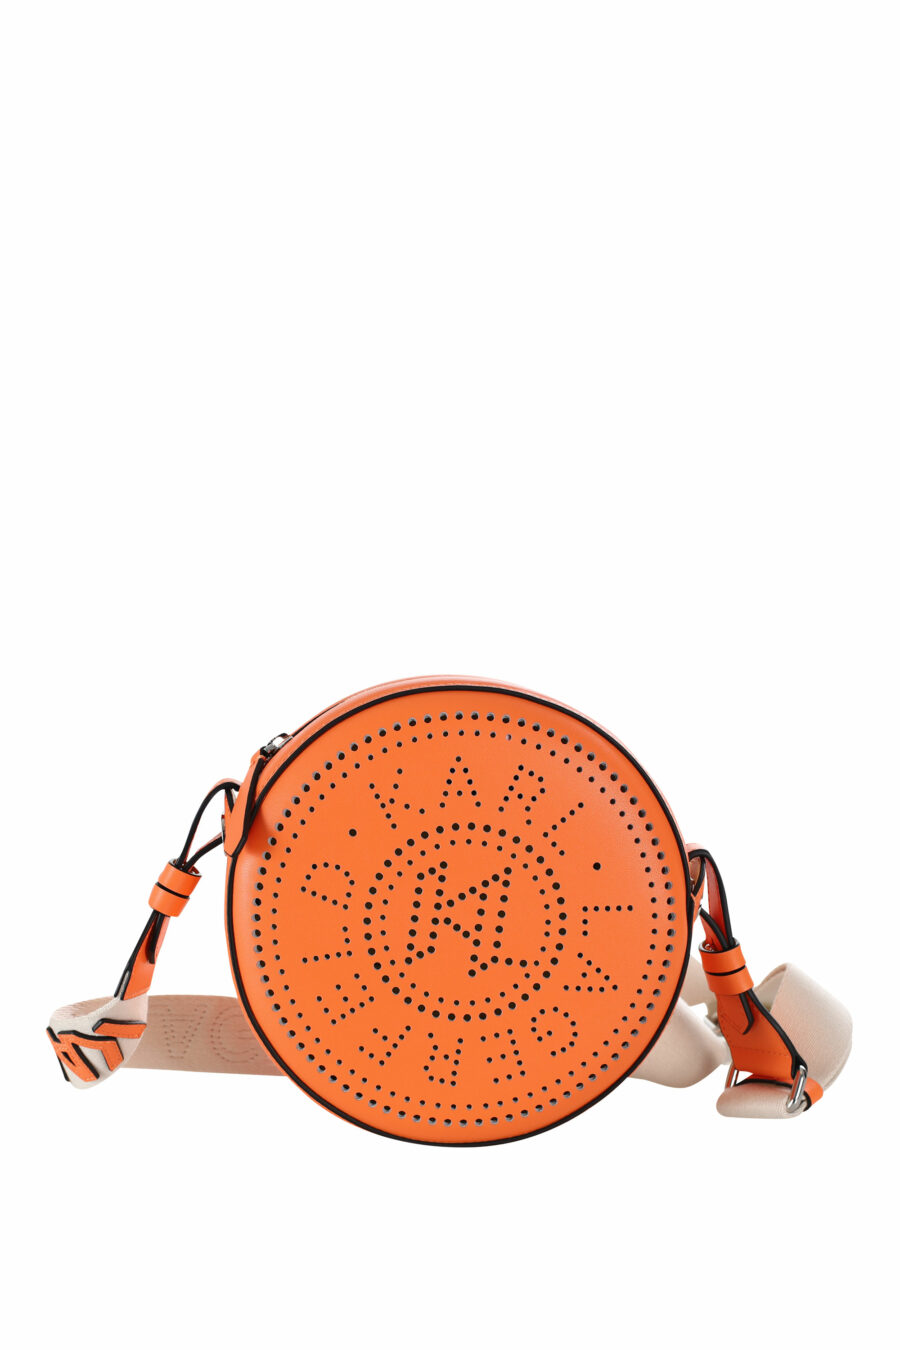 Bolso bandolero naranja circular con logo "k/circle" - 8720744234739